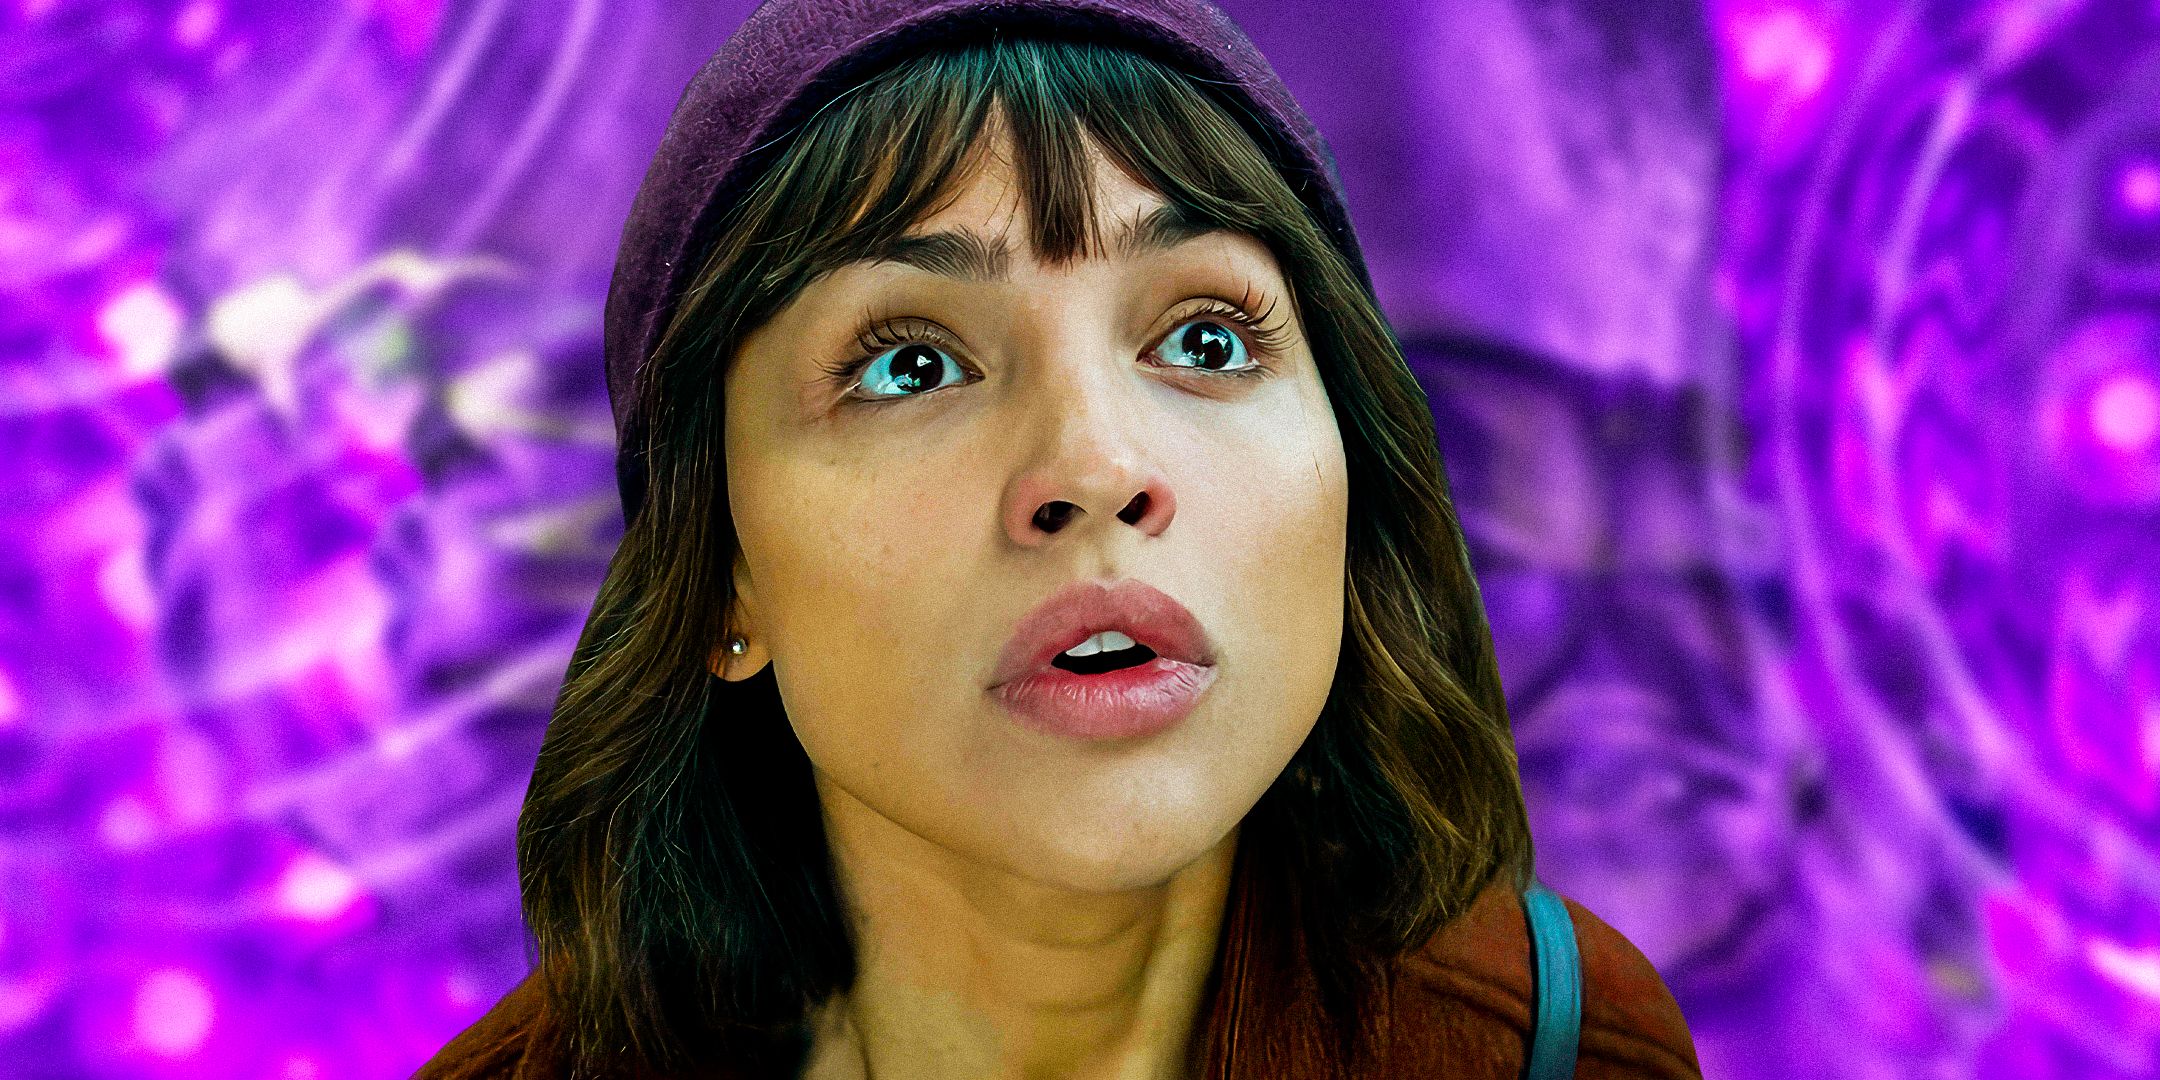 Eiza Gonzalez as Auggie Salazar looking shocked in 3 Body Problem with purple background